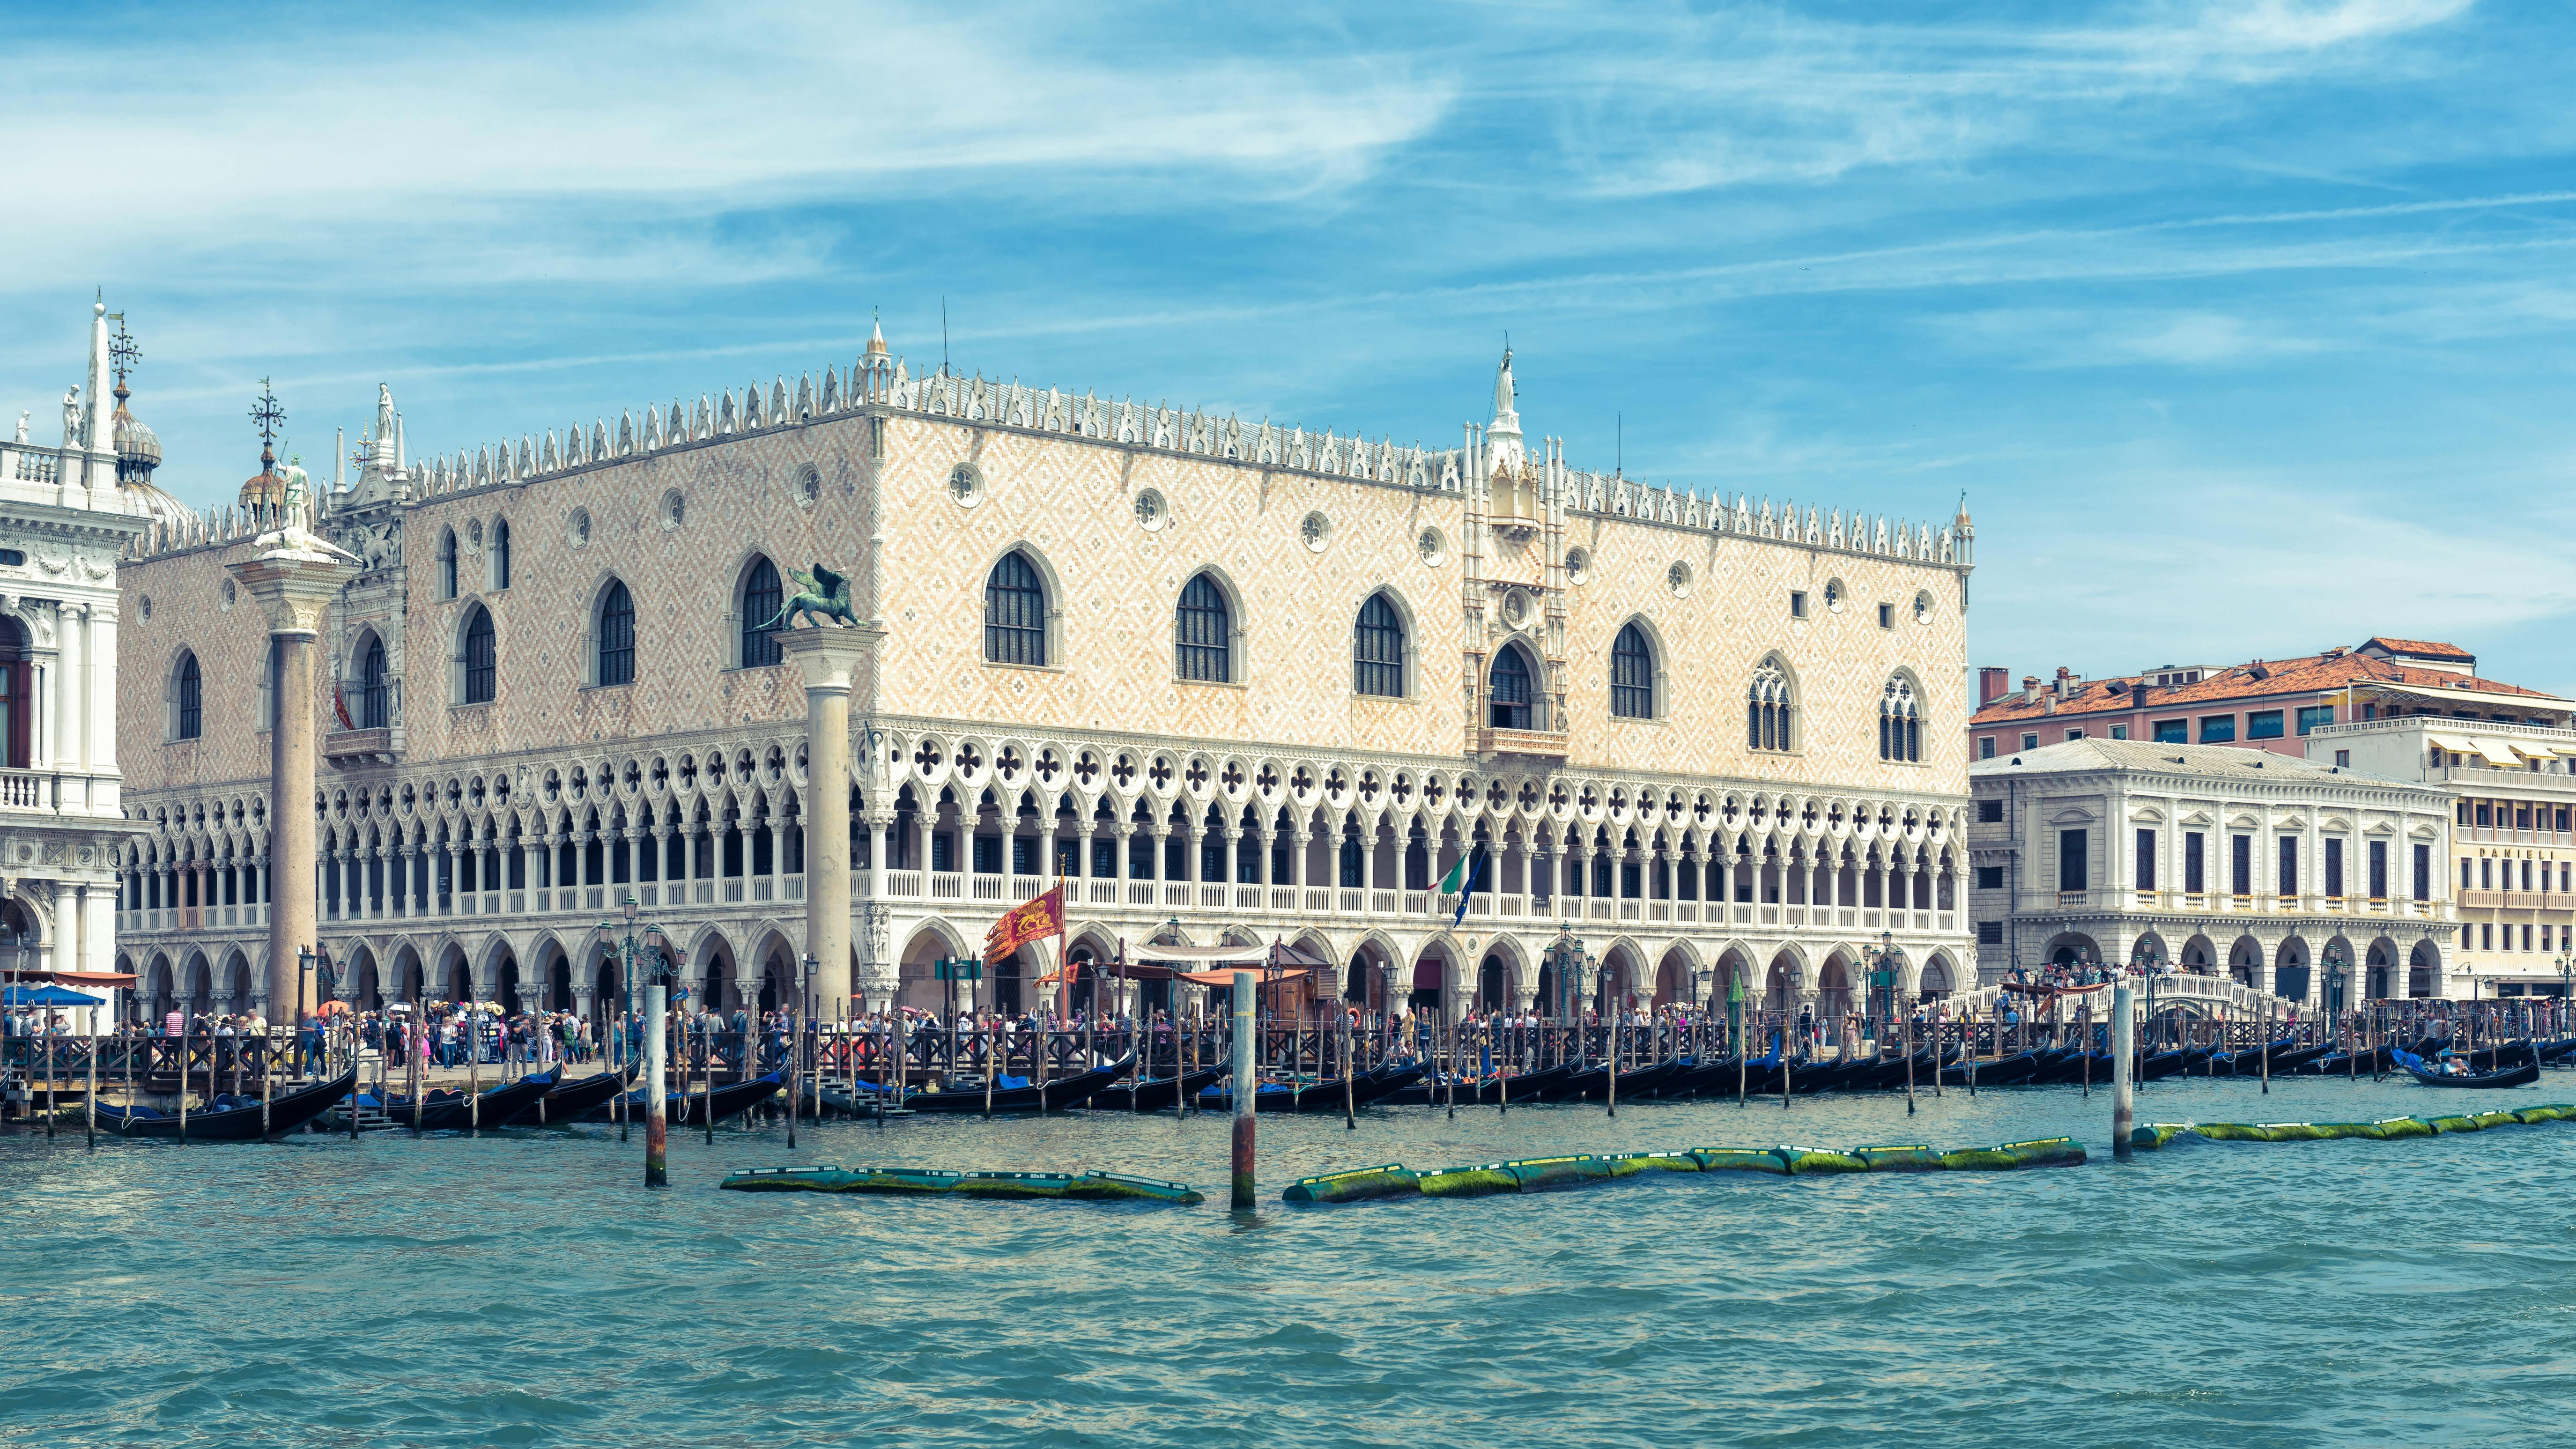 Wandeling met gids langs de highlights van Venetië met het Dogepaleis en de Basiliek van San Marco